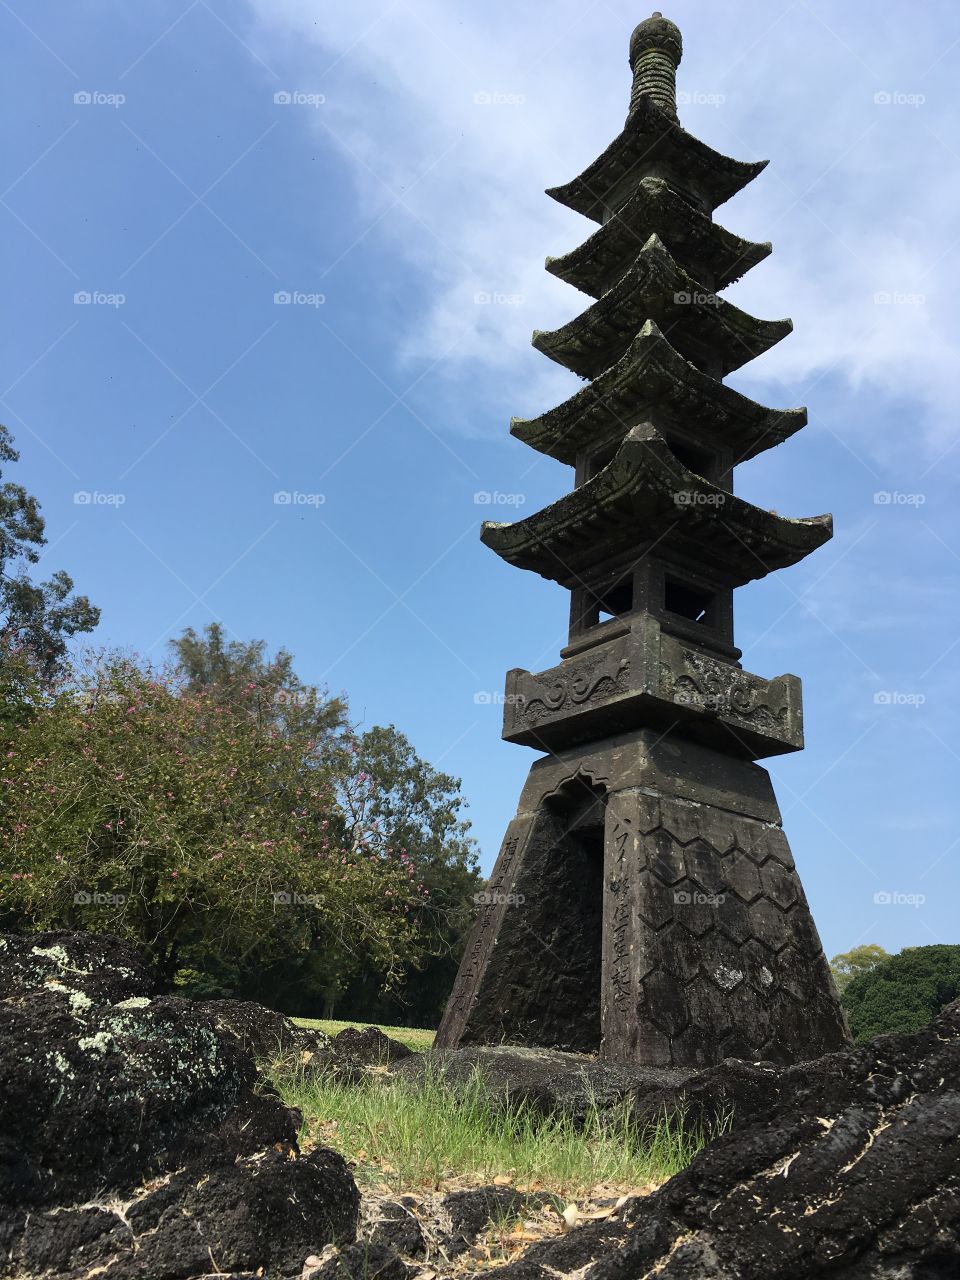 Pagoda in Liliuokalani Park Hilo Hawaii